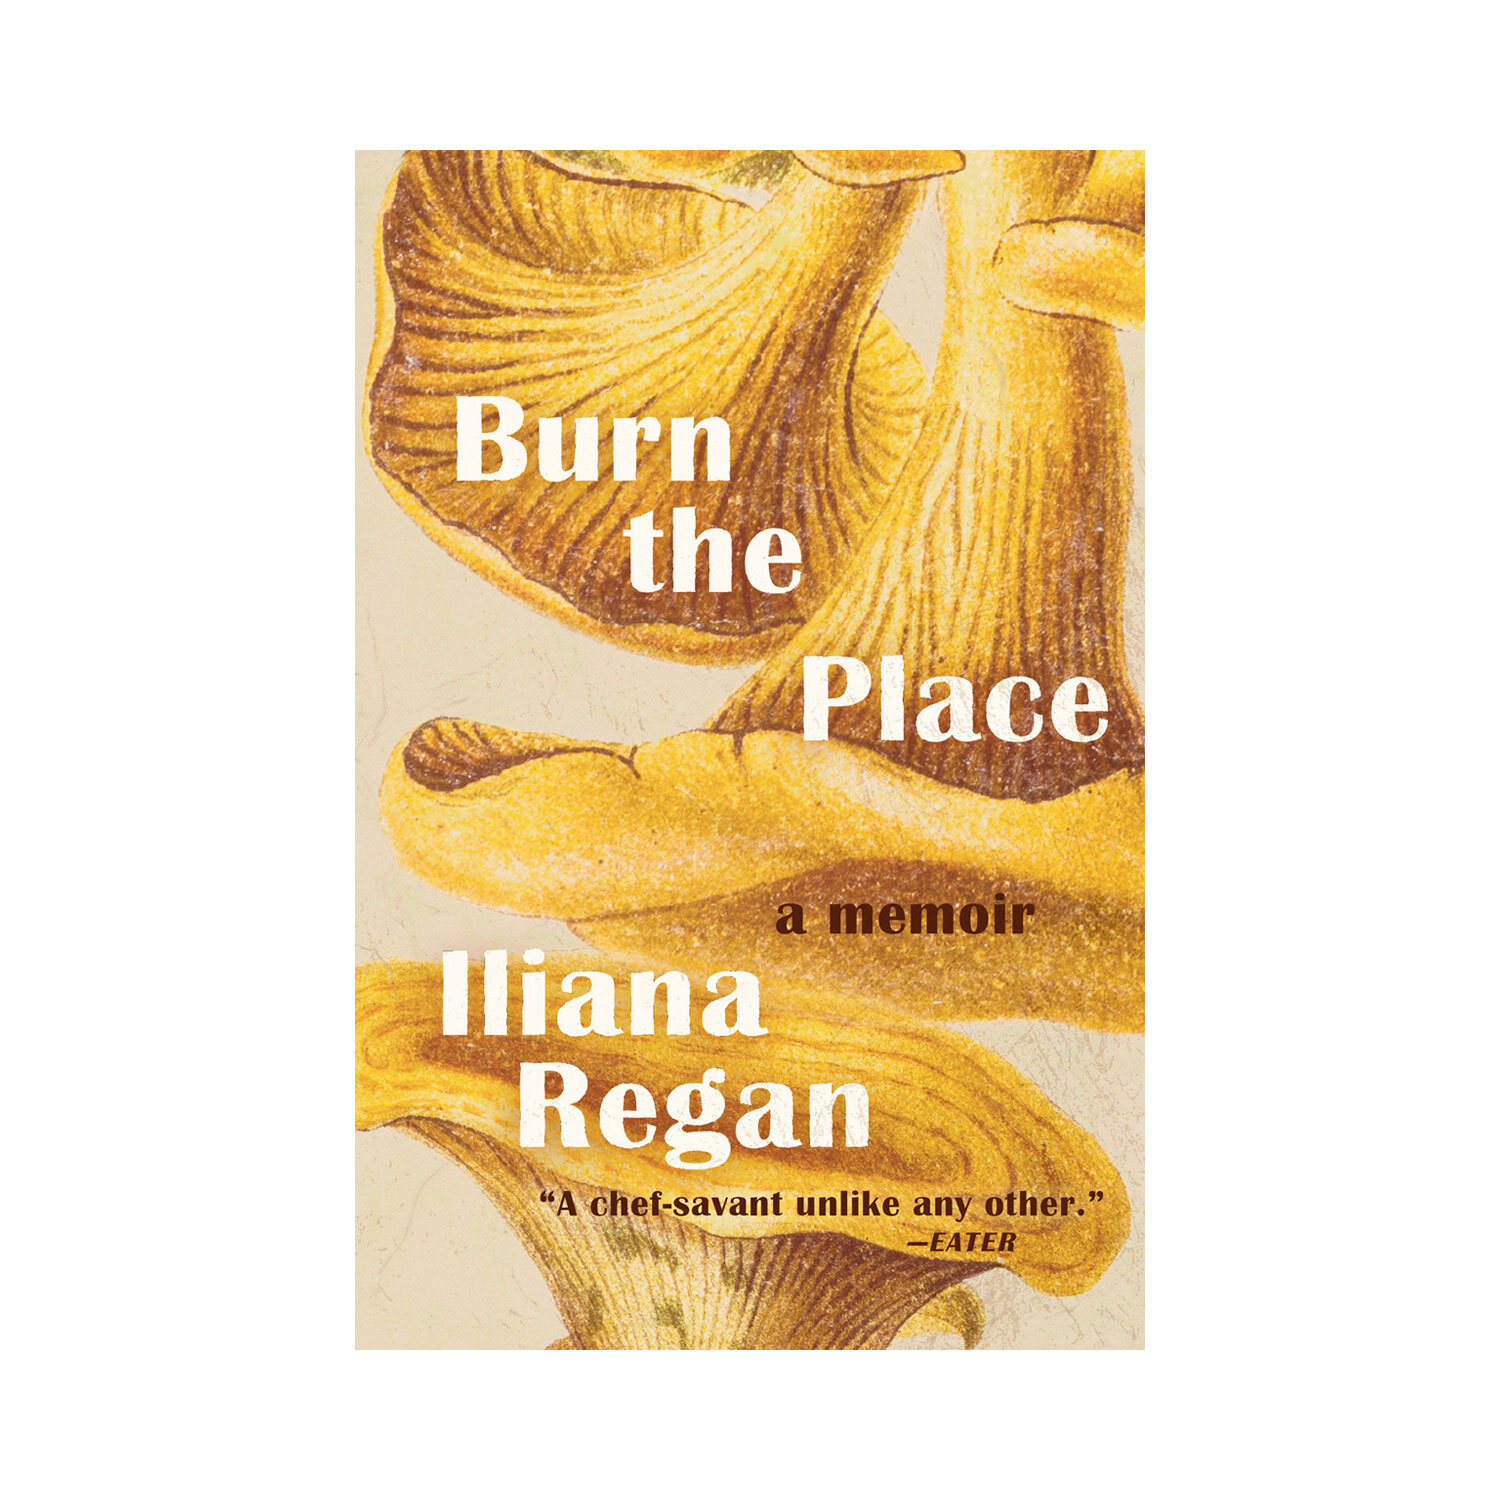 Burn the Place by Iliana Regan